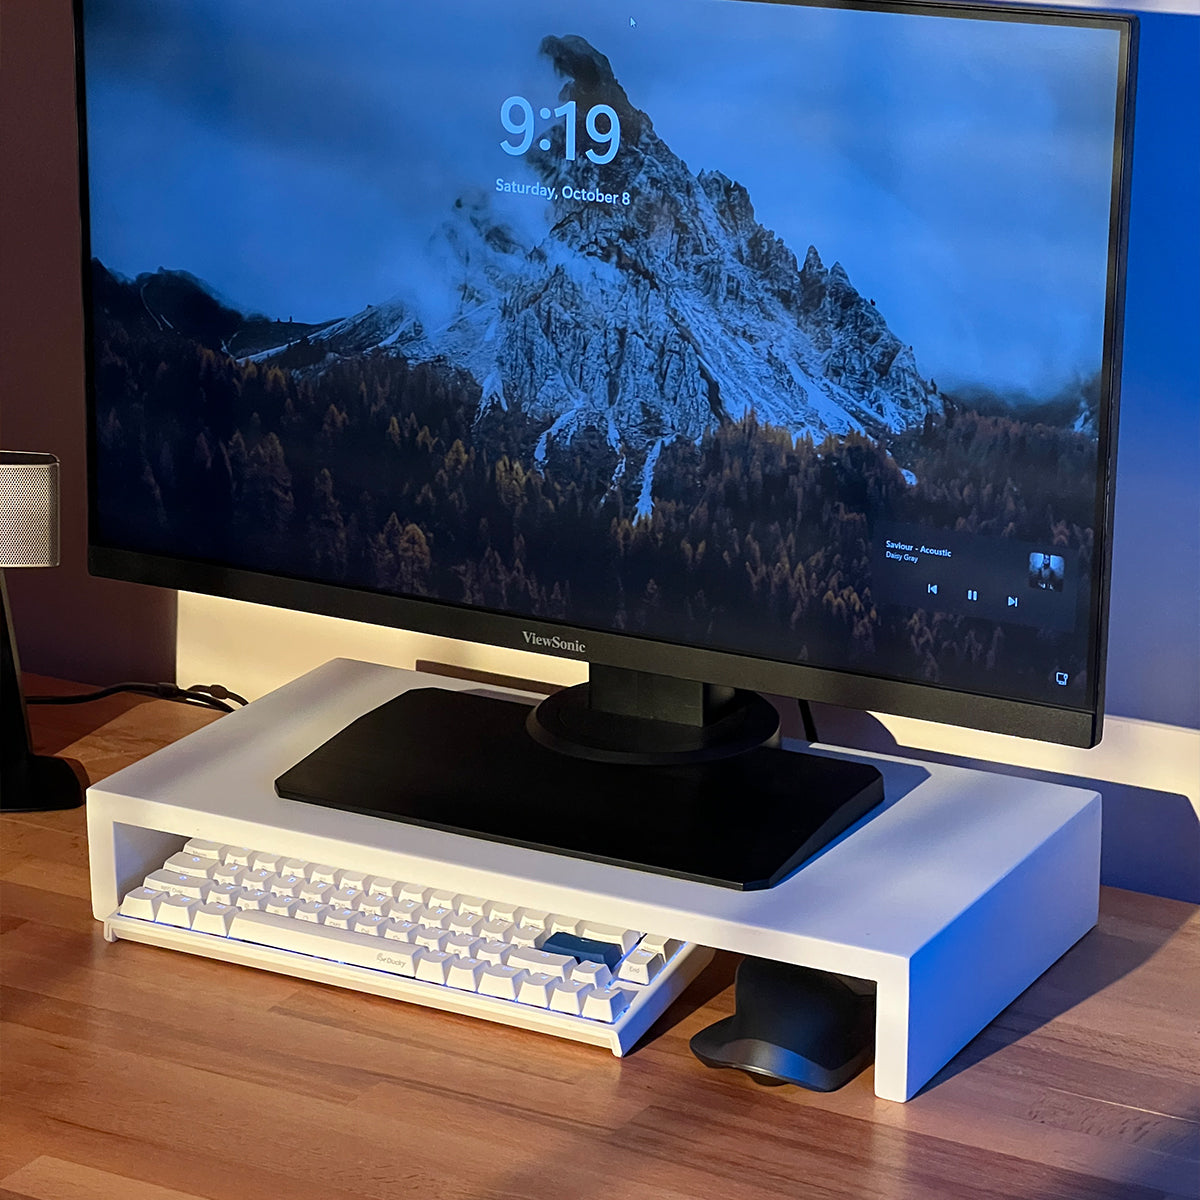 Monitor Stand Riser for Desk- Desk Organizer